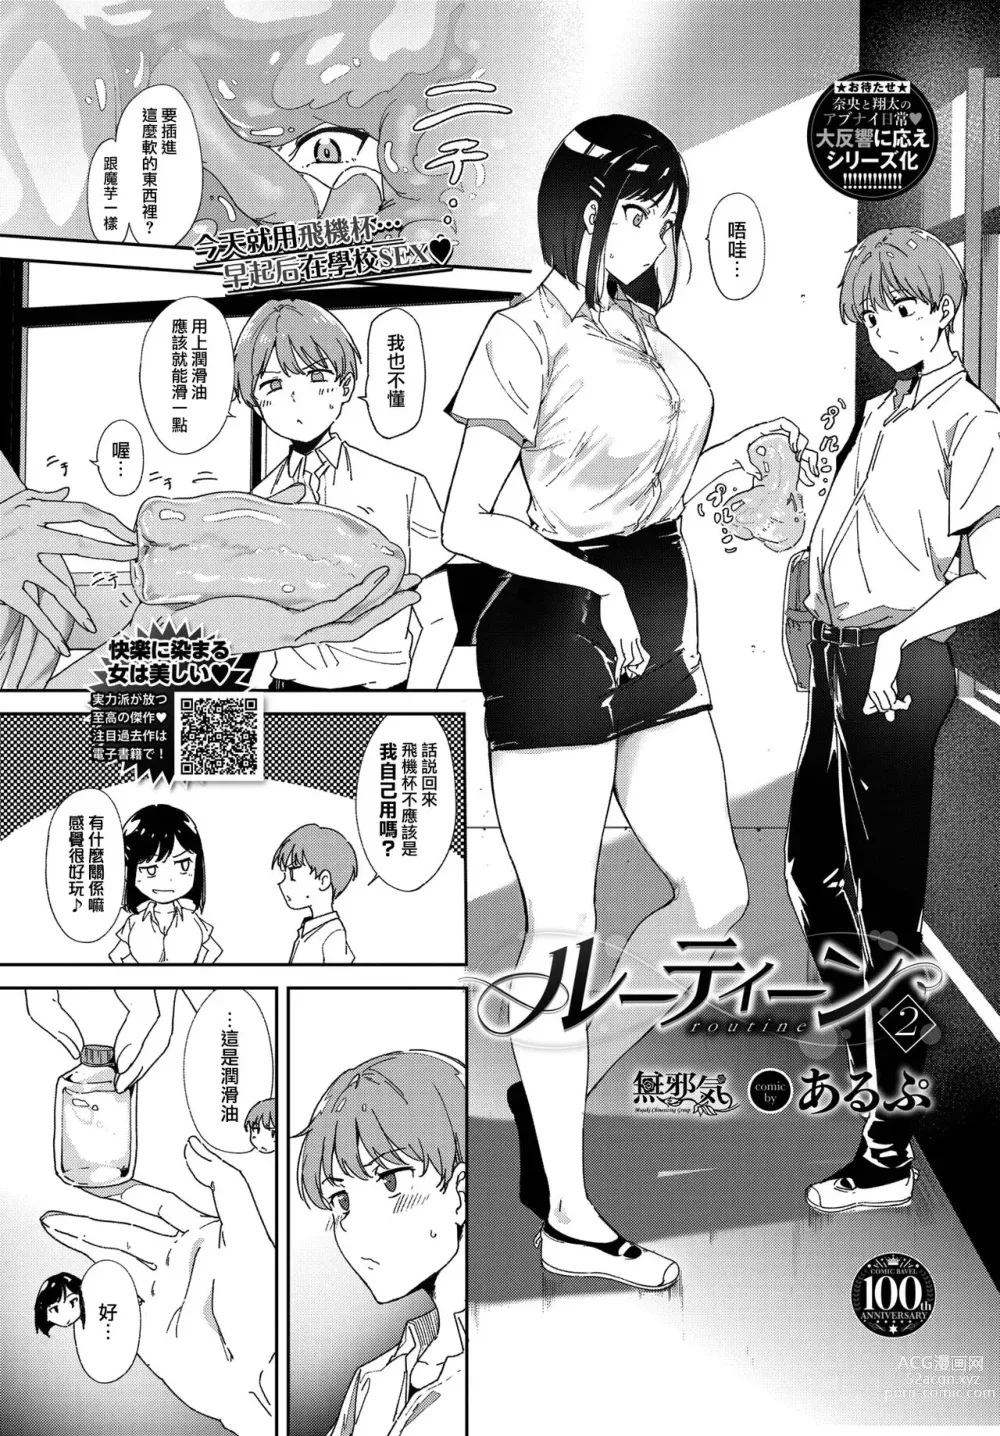 Page 2 of manga Routine 2